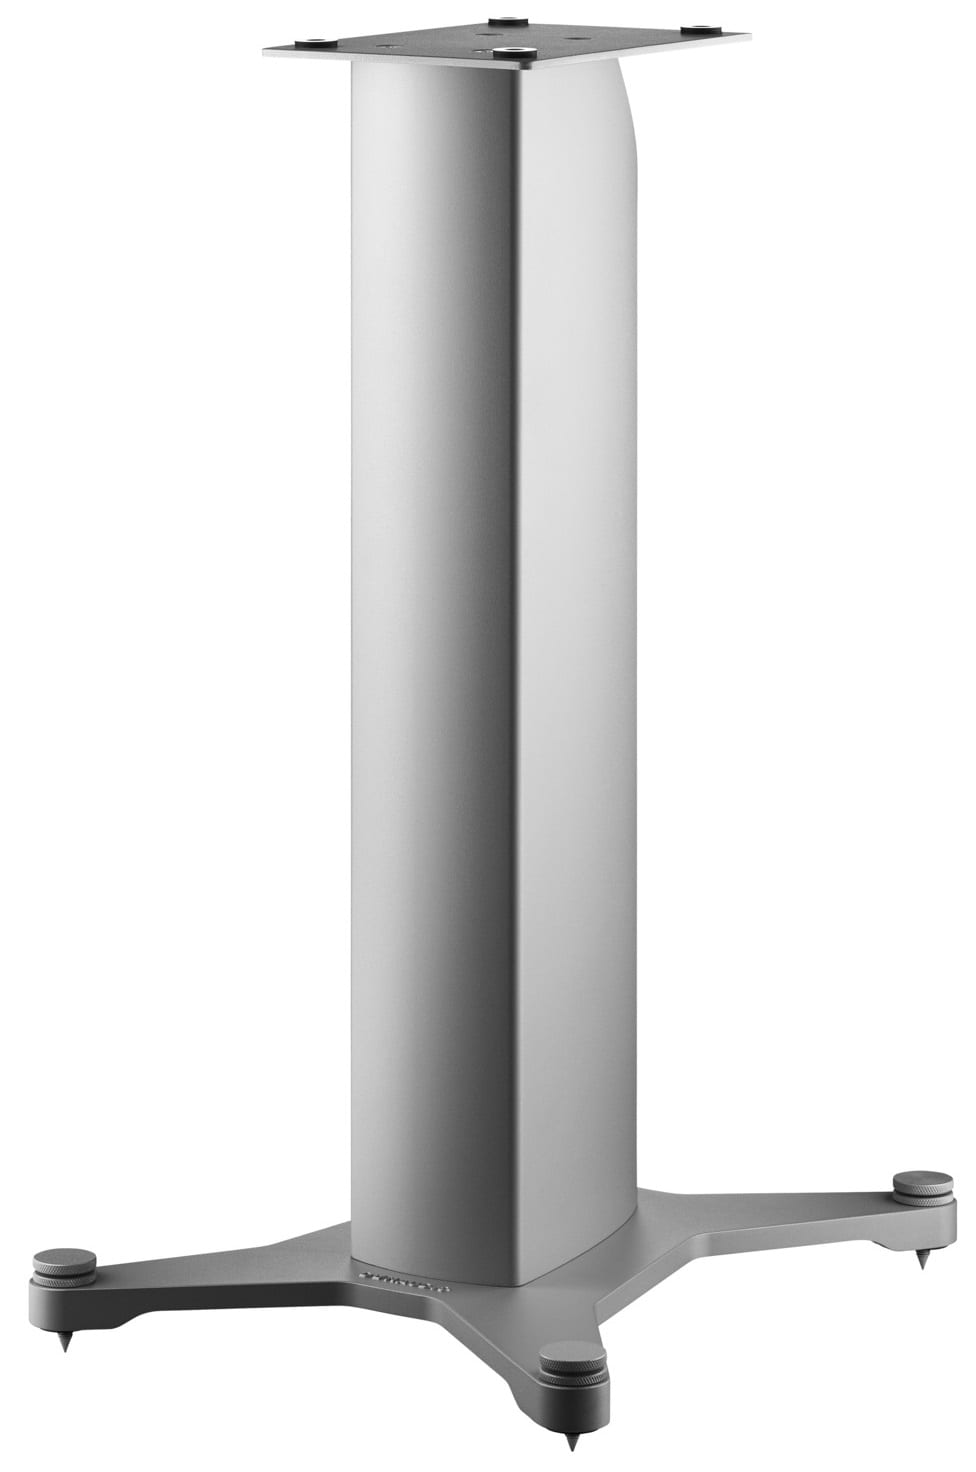 Dynaudio Stand 20 zilver satijn - Speaker standaard